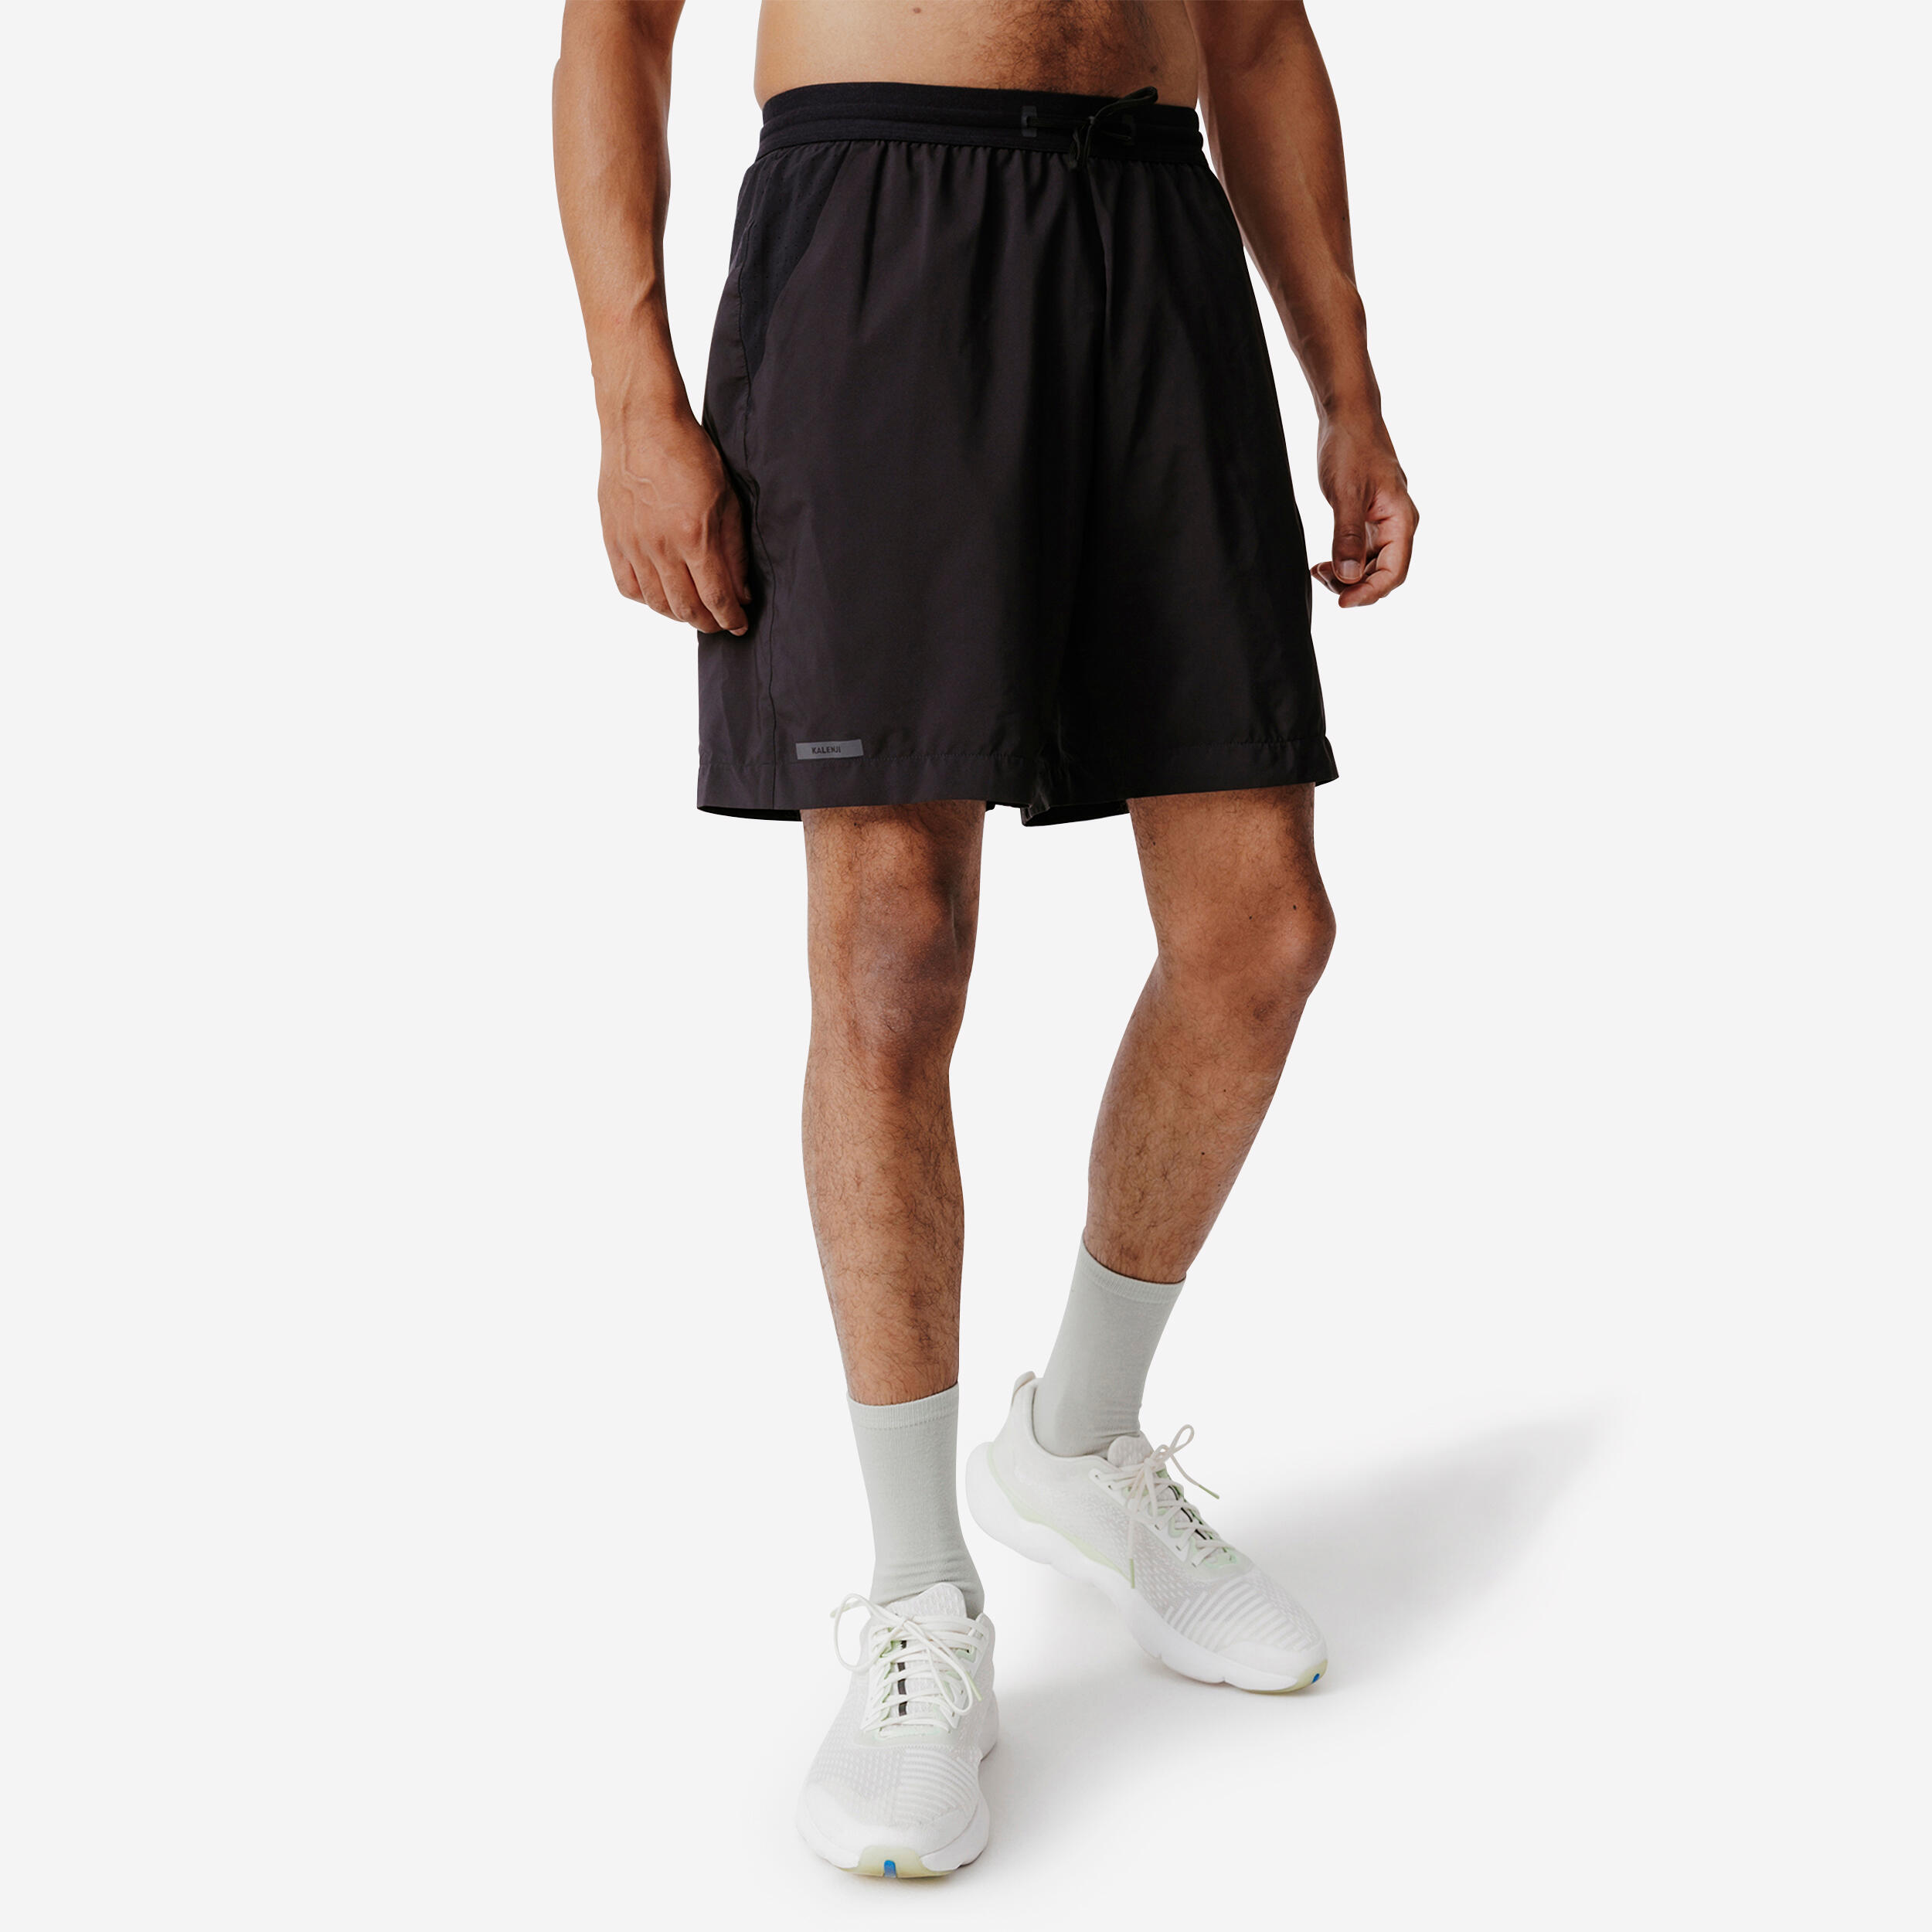 Mens Sports Shorts 2.0 - Black